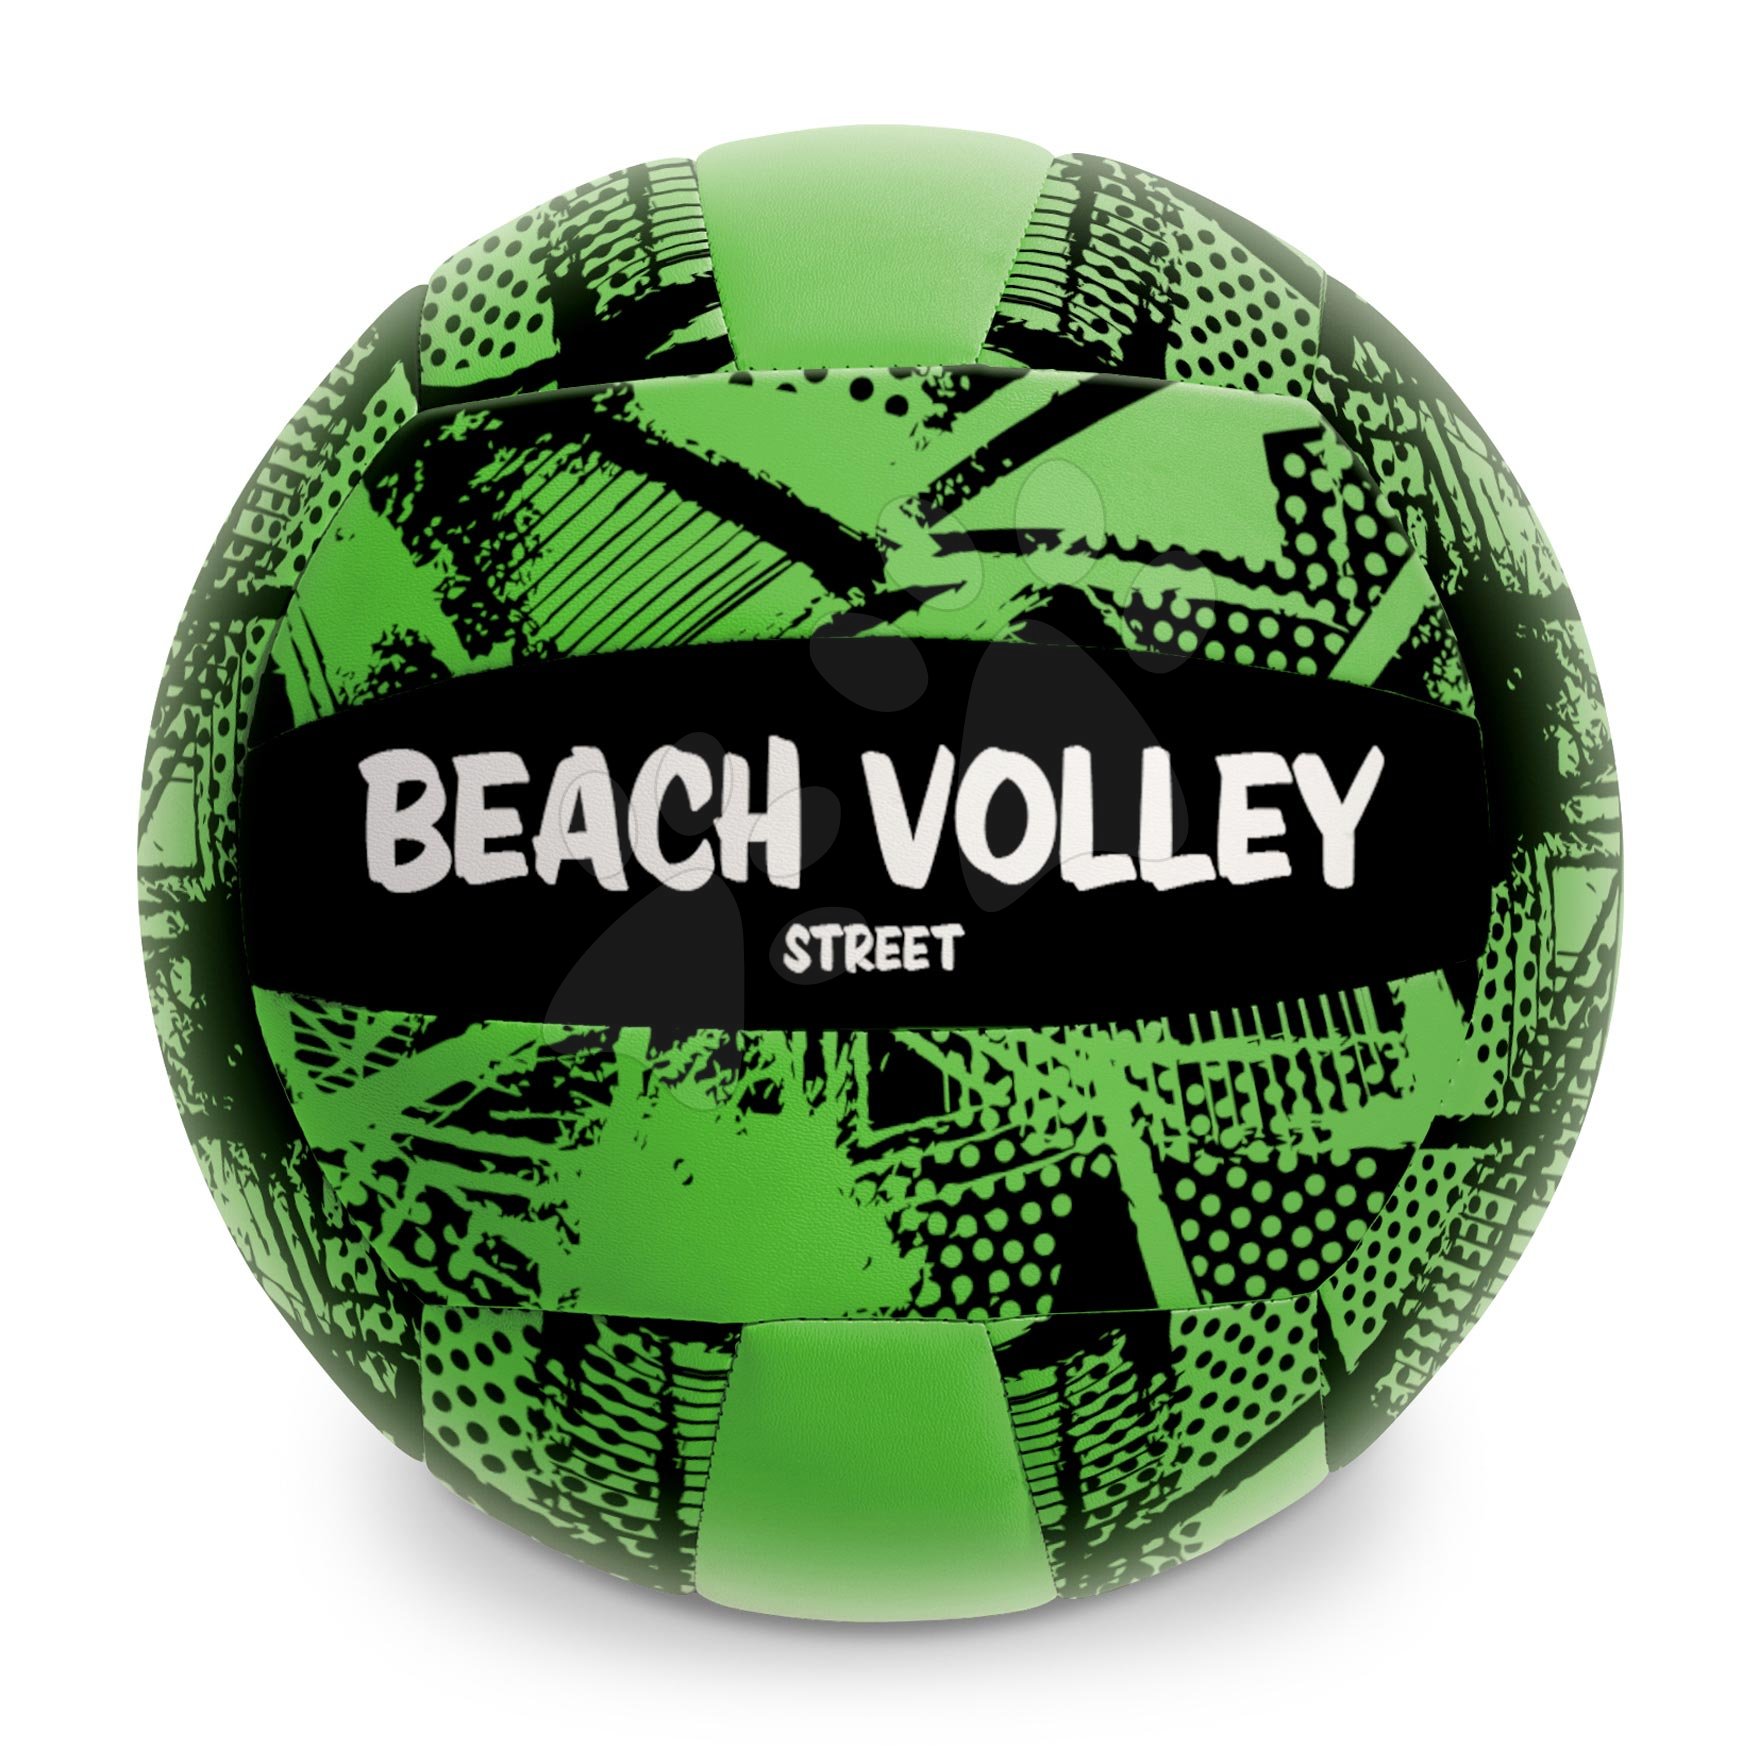 Sportovní míče - Volejbalový míč šitý Beach Volley Street Mondo velikost 5 váha 270 g